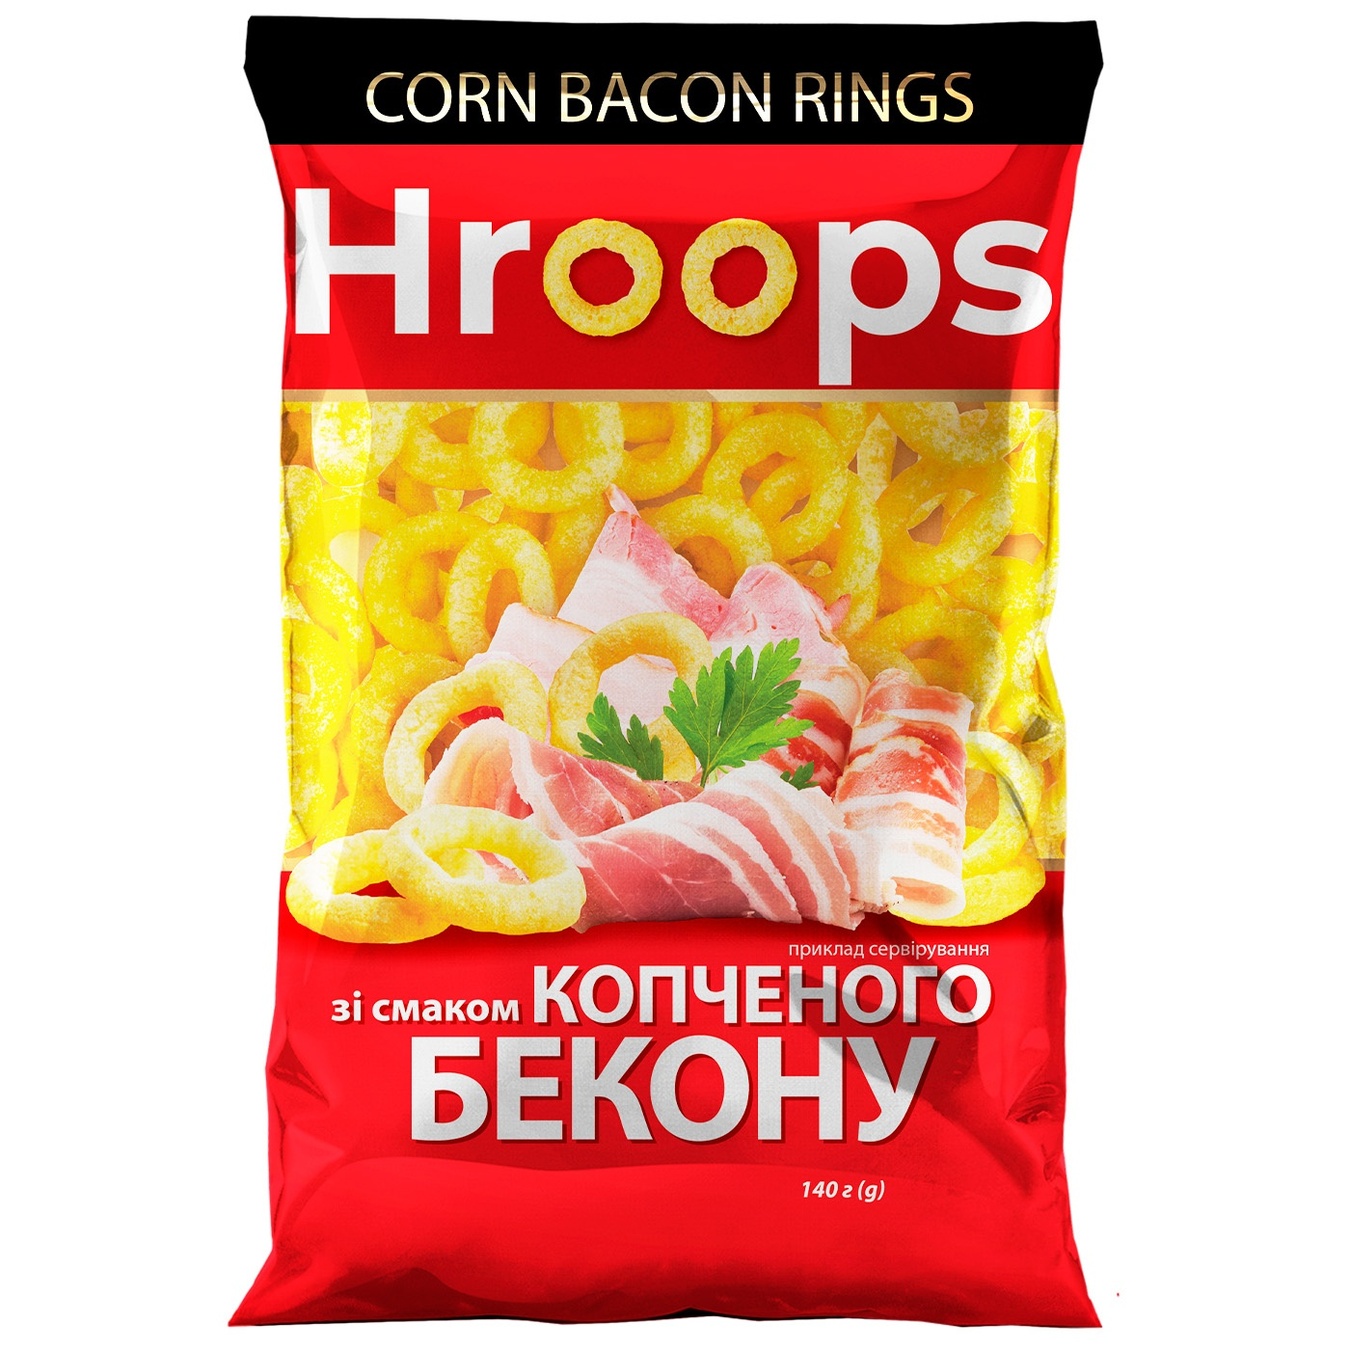 Hroops snacks corn flavor smoked bacon 140g